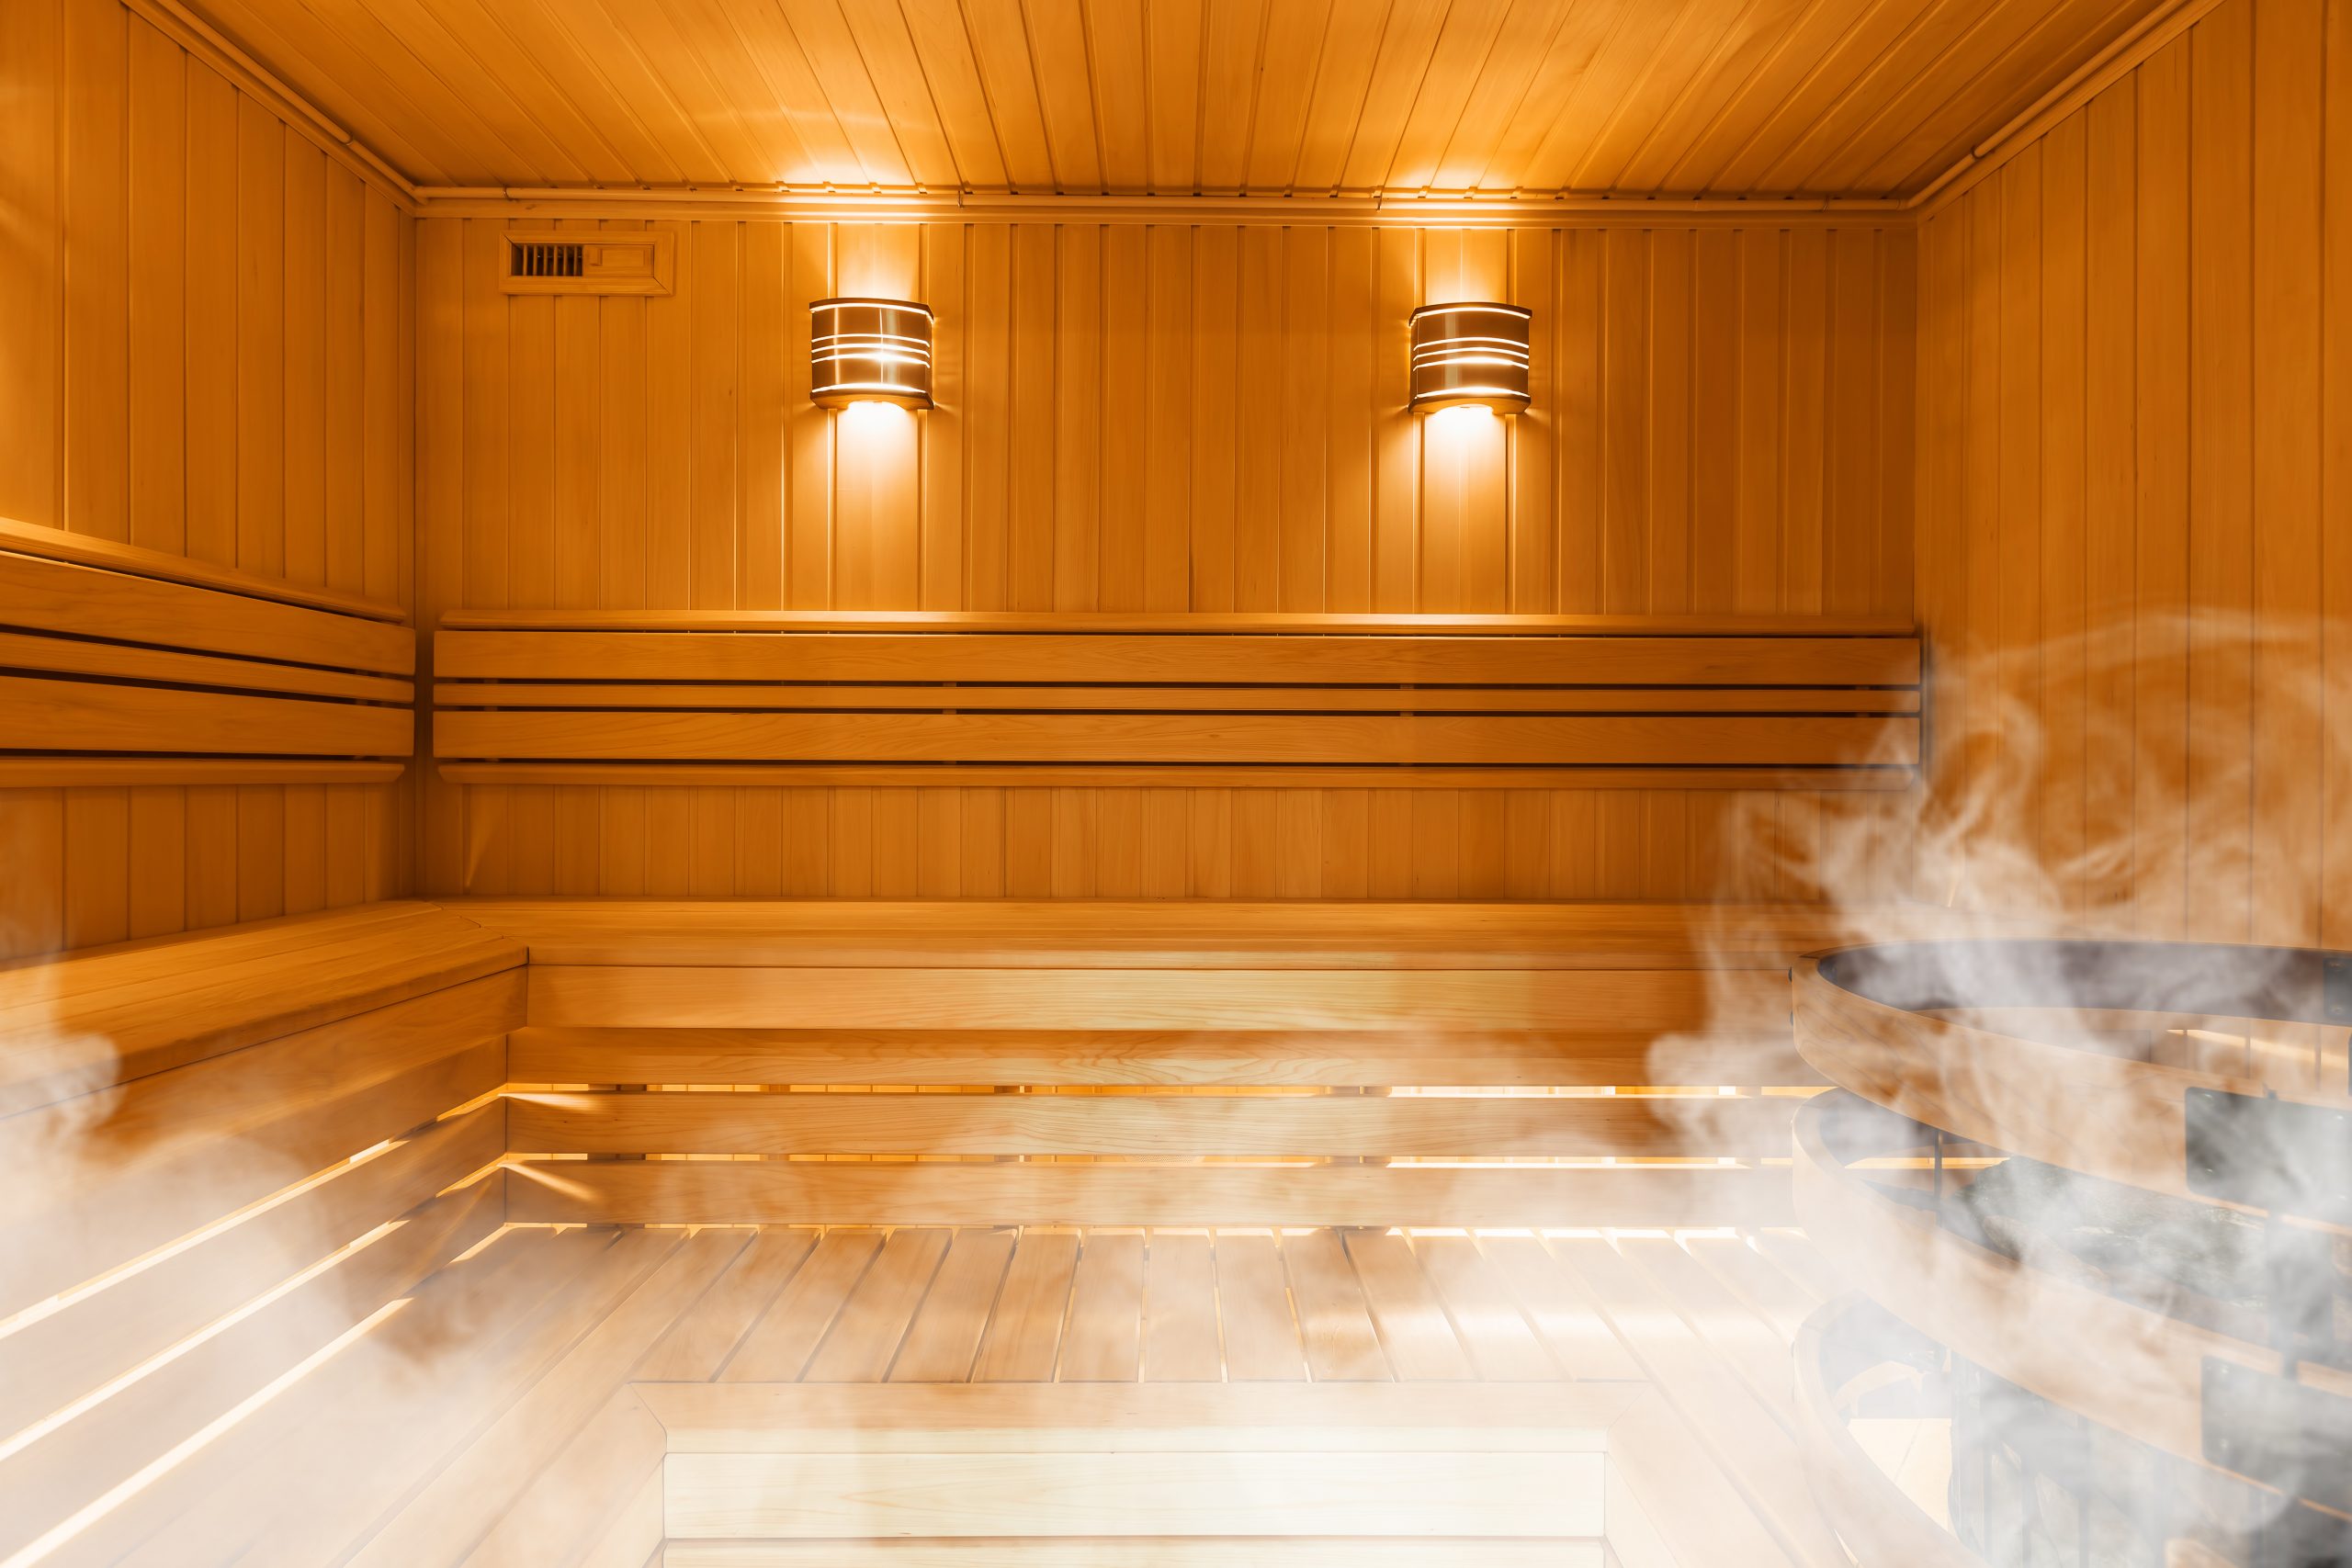 Temperature Limit Switch for Sauna